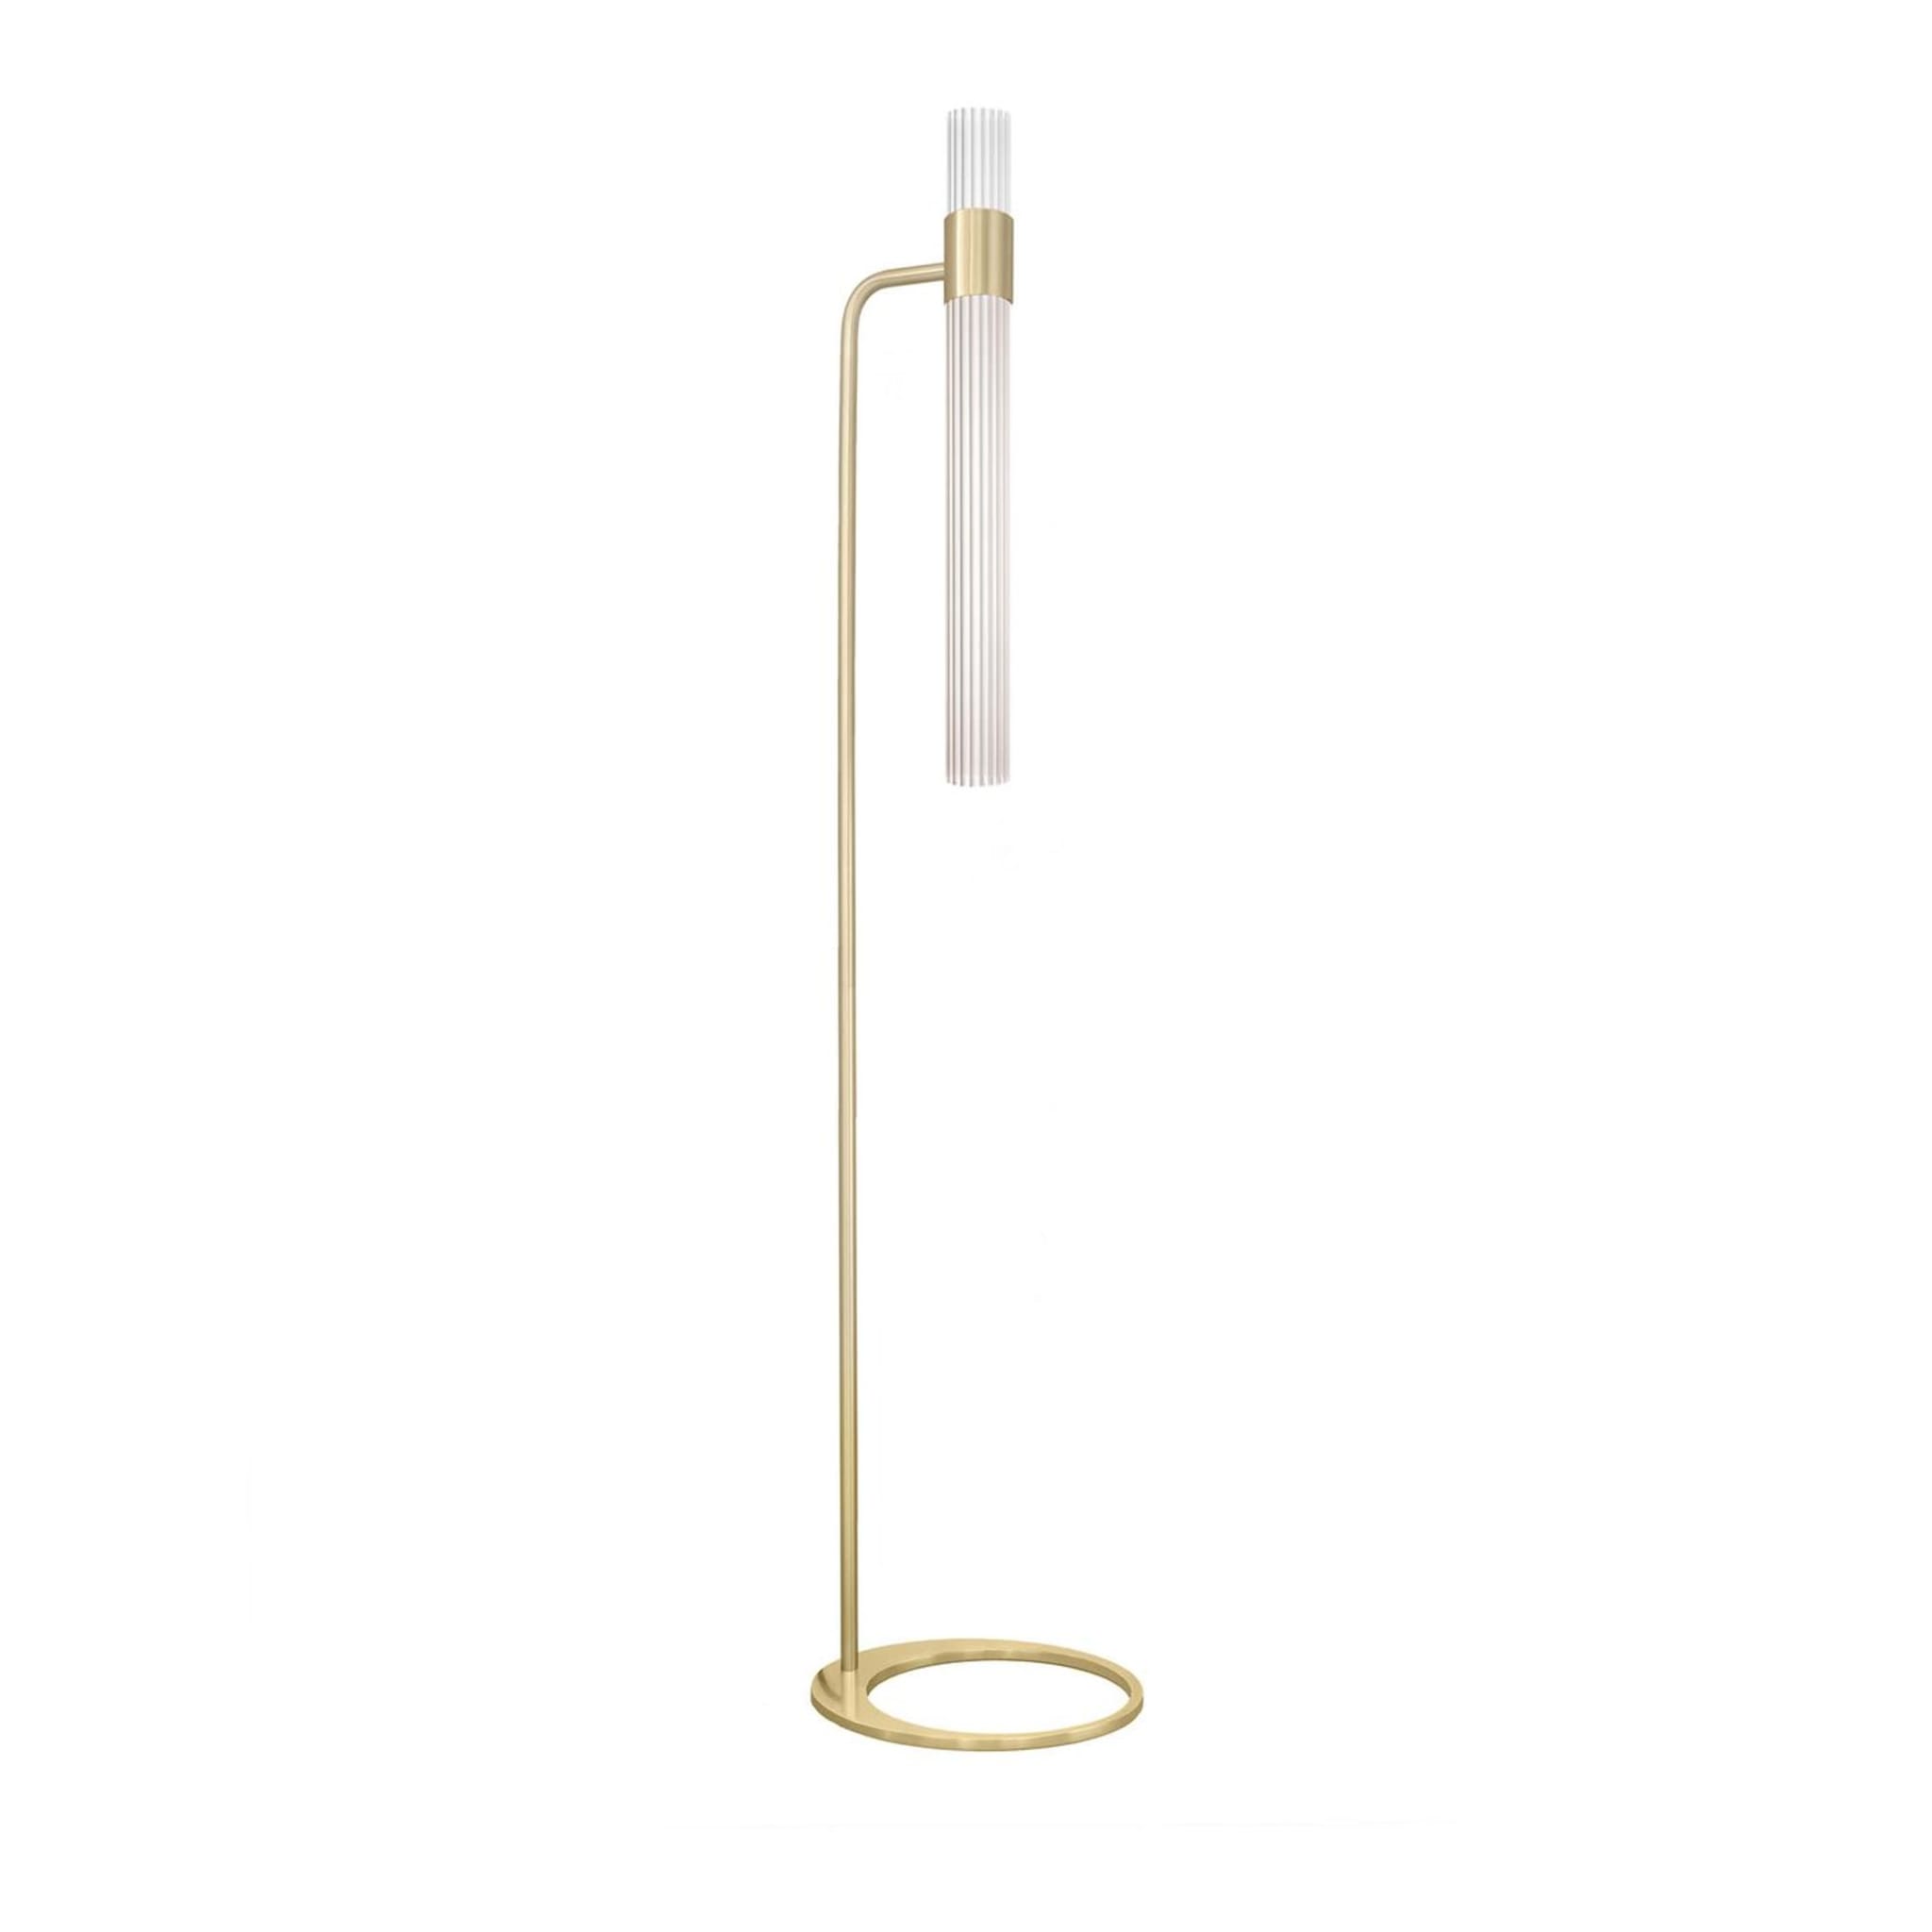 Sbarlusc White Glass and Brass Floor Lamp by Isacco Brioschi - Main view